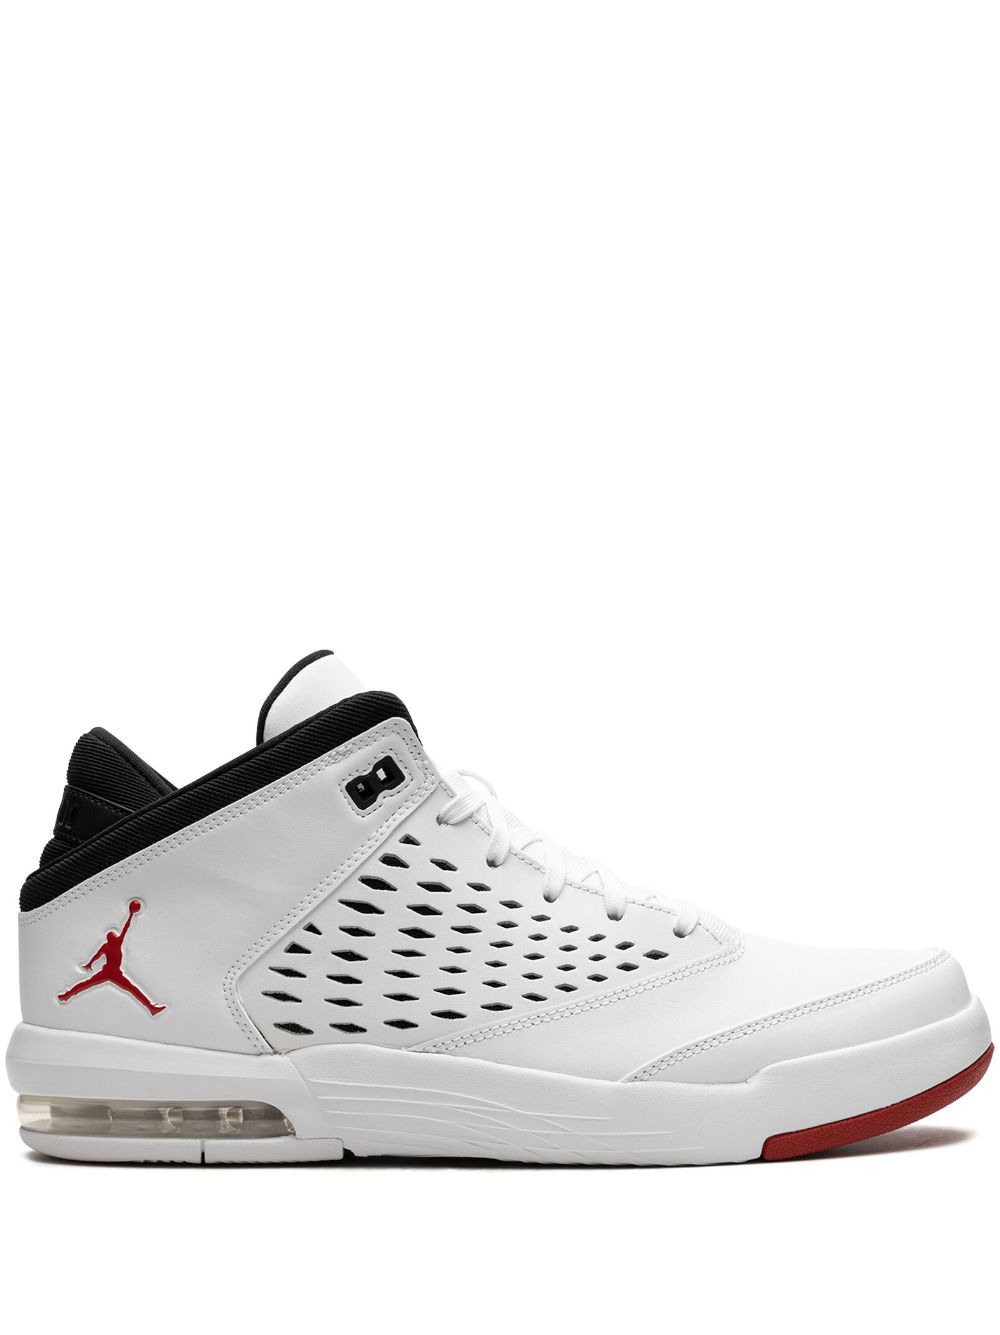 Jordan Flight Origin 4 sneakers